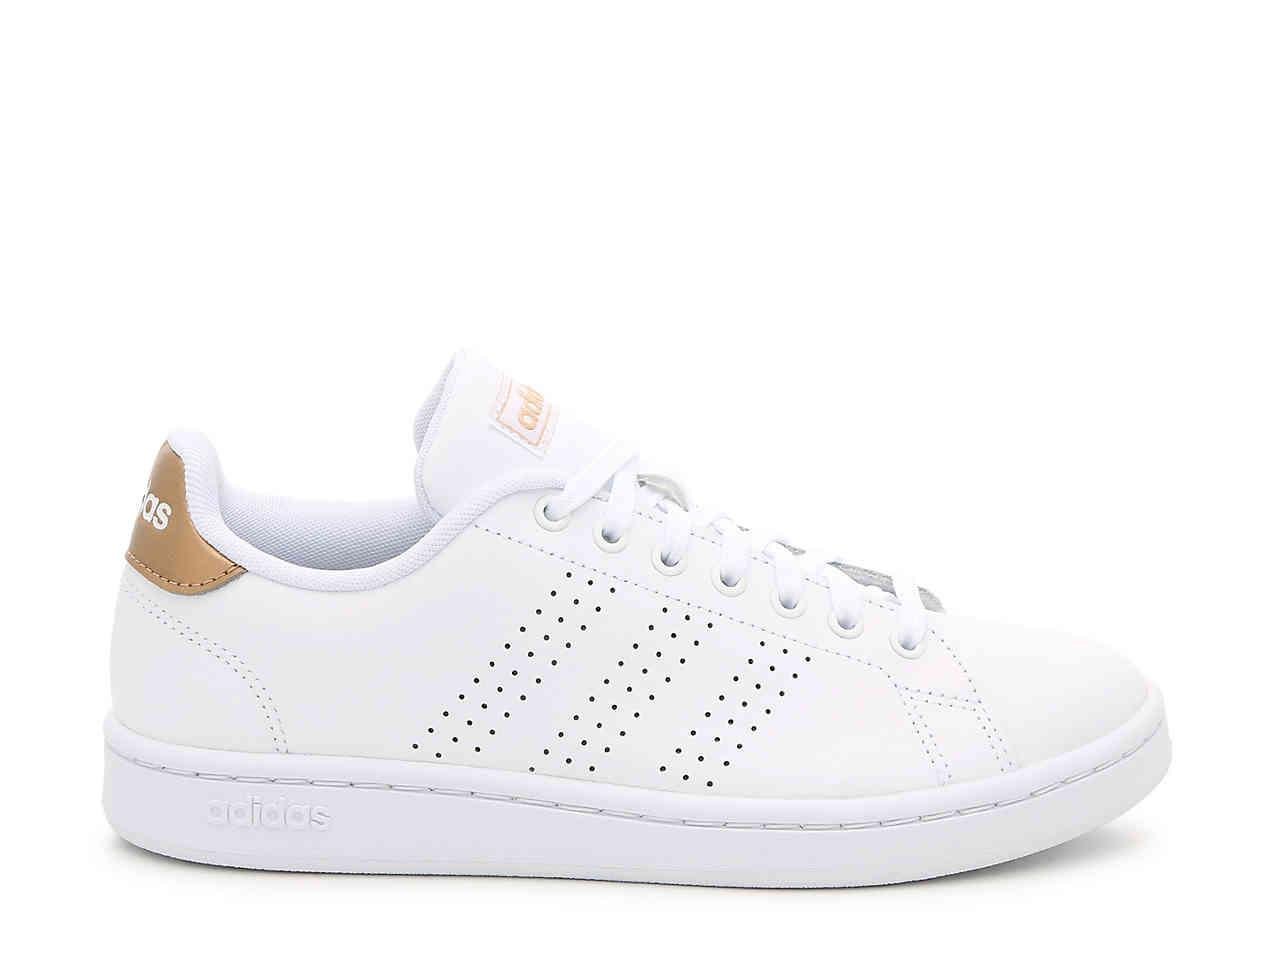 adidas Leather Advantage Sneaker in White/Rose Gold Metallic (White) - Lyst